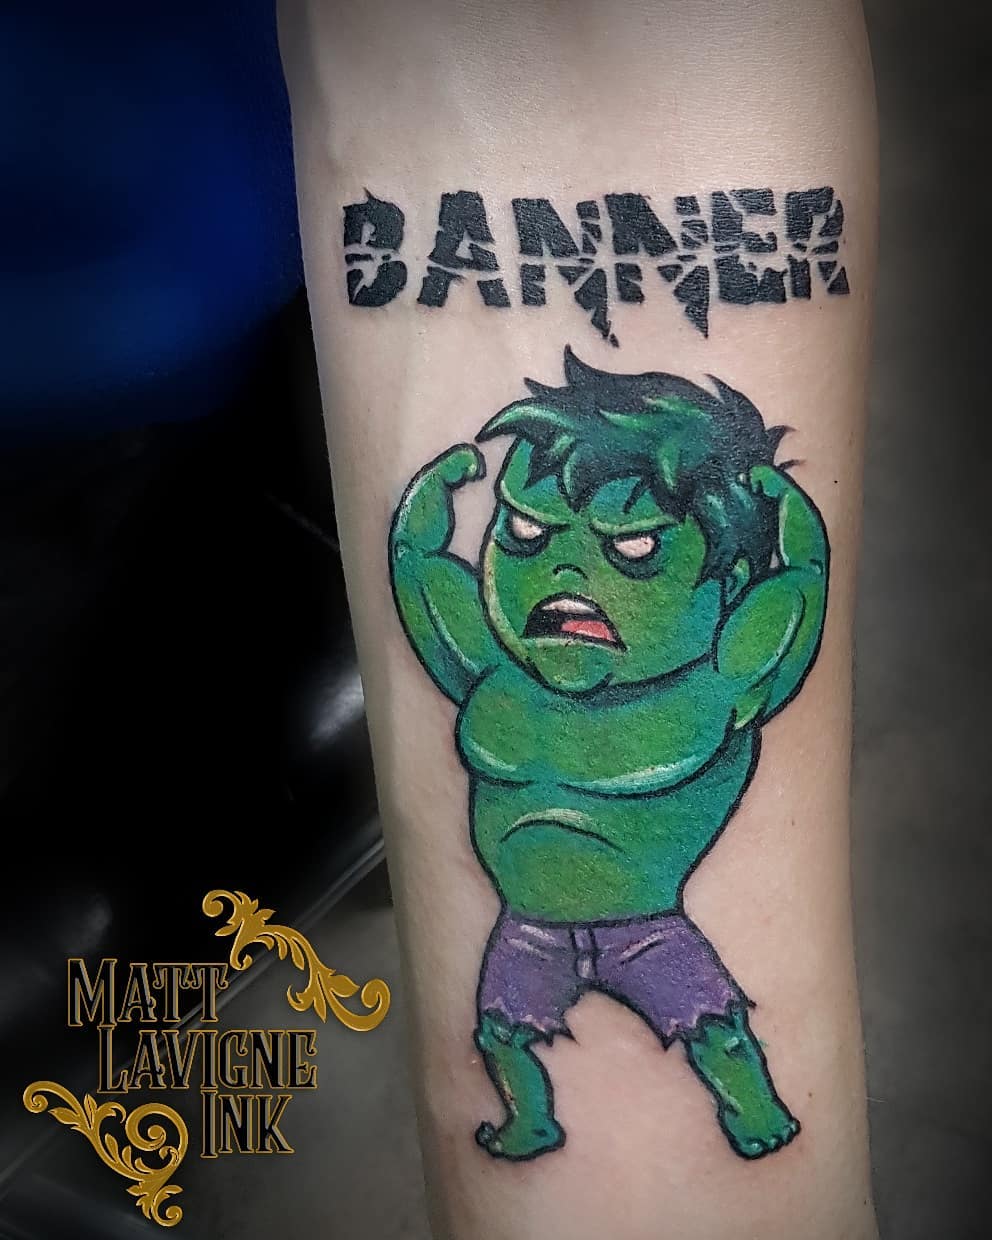 Incredible Hulk Tattoos